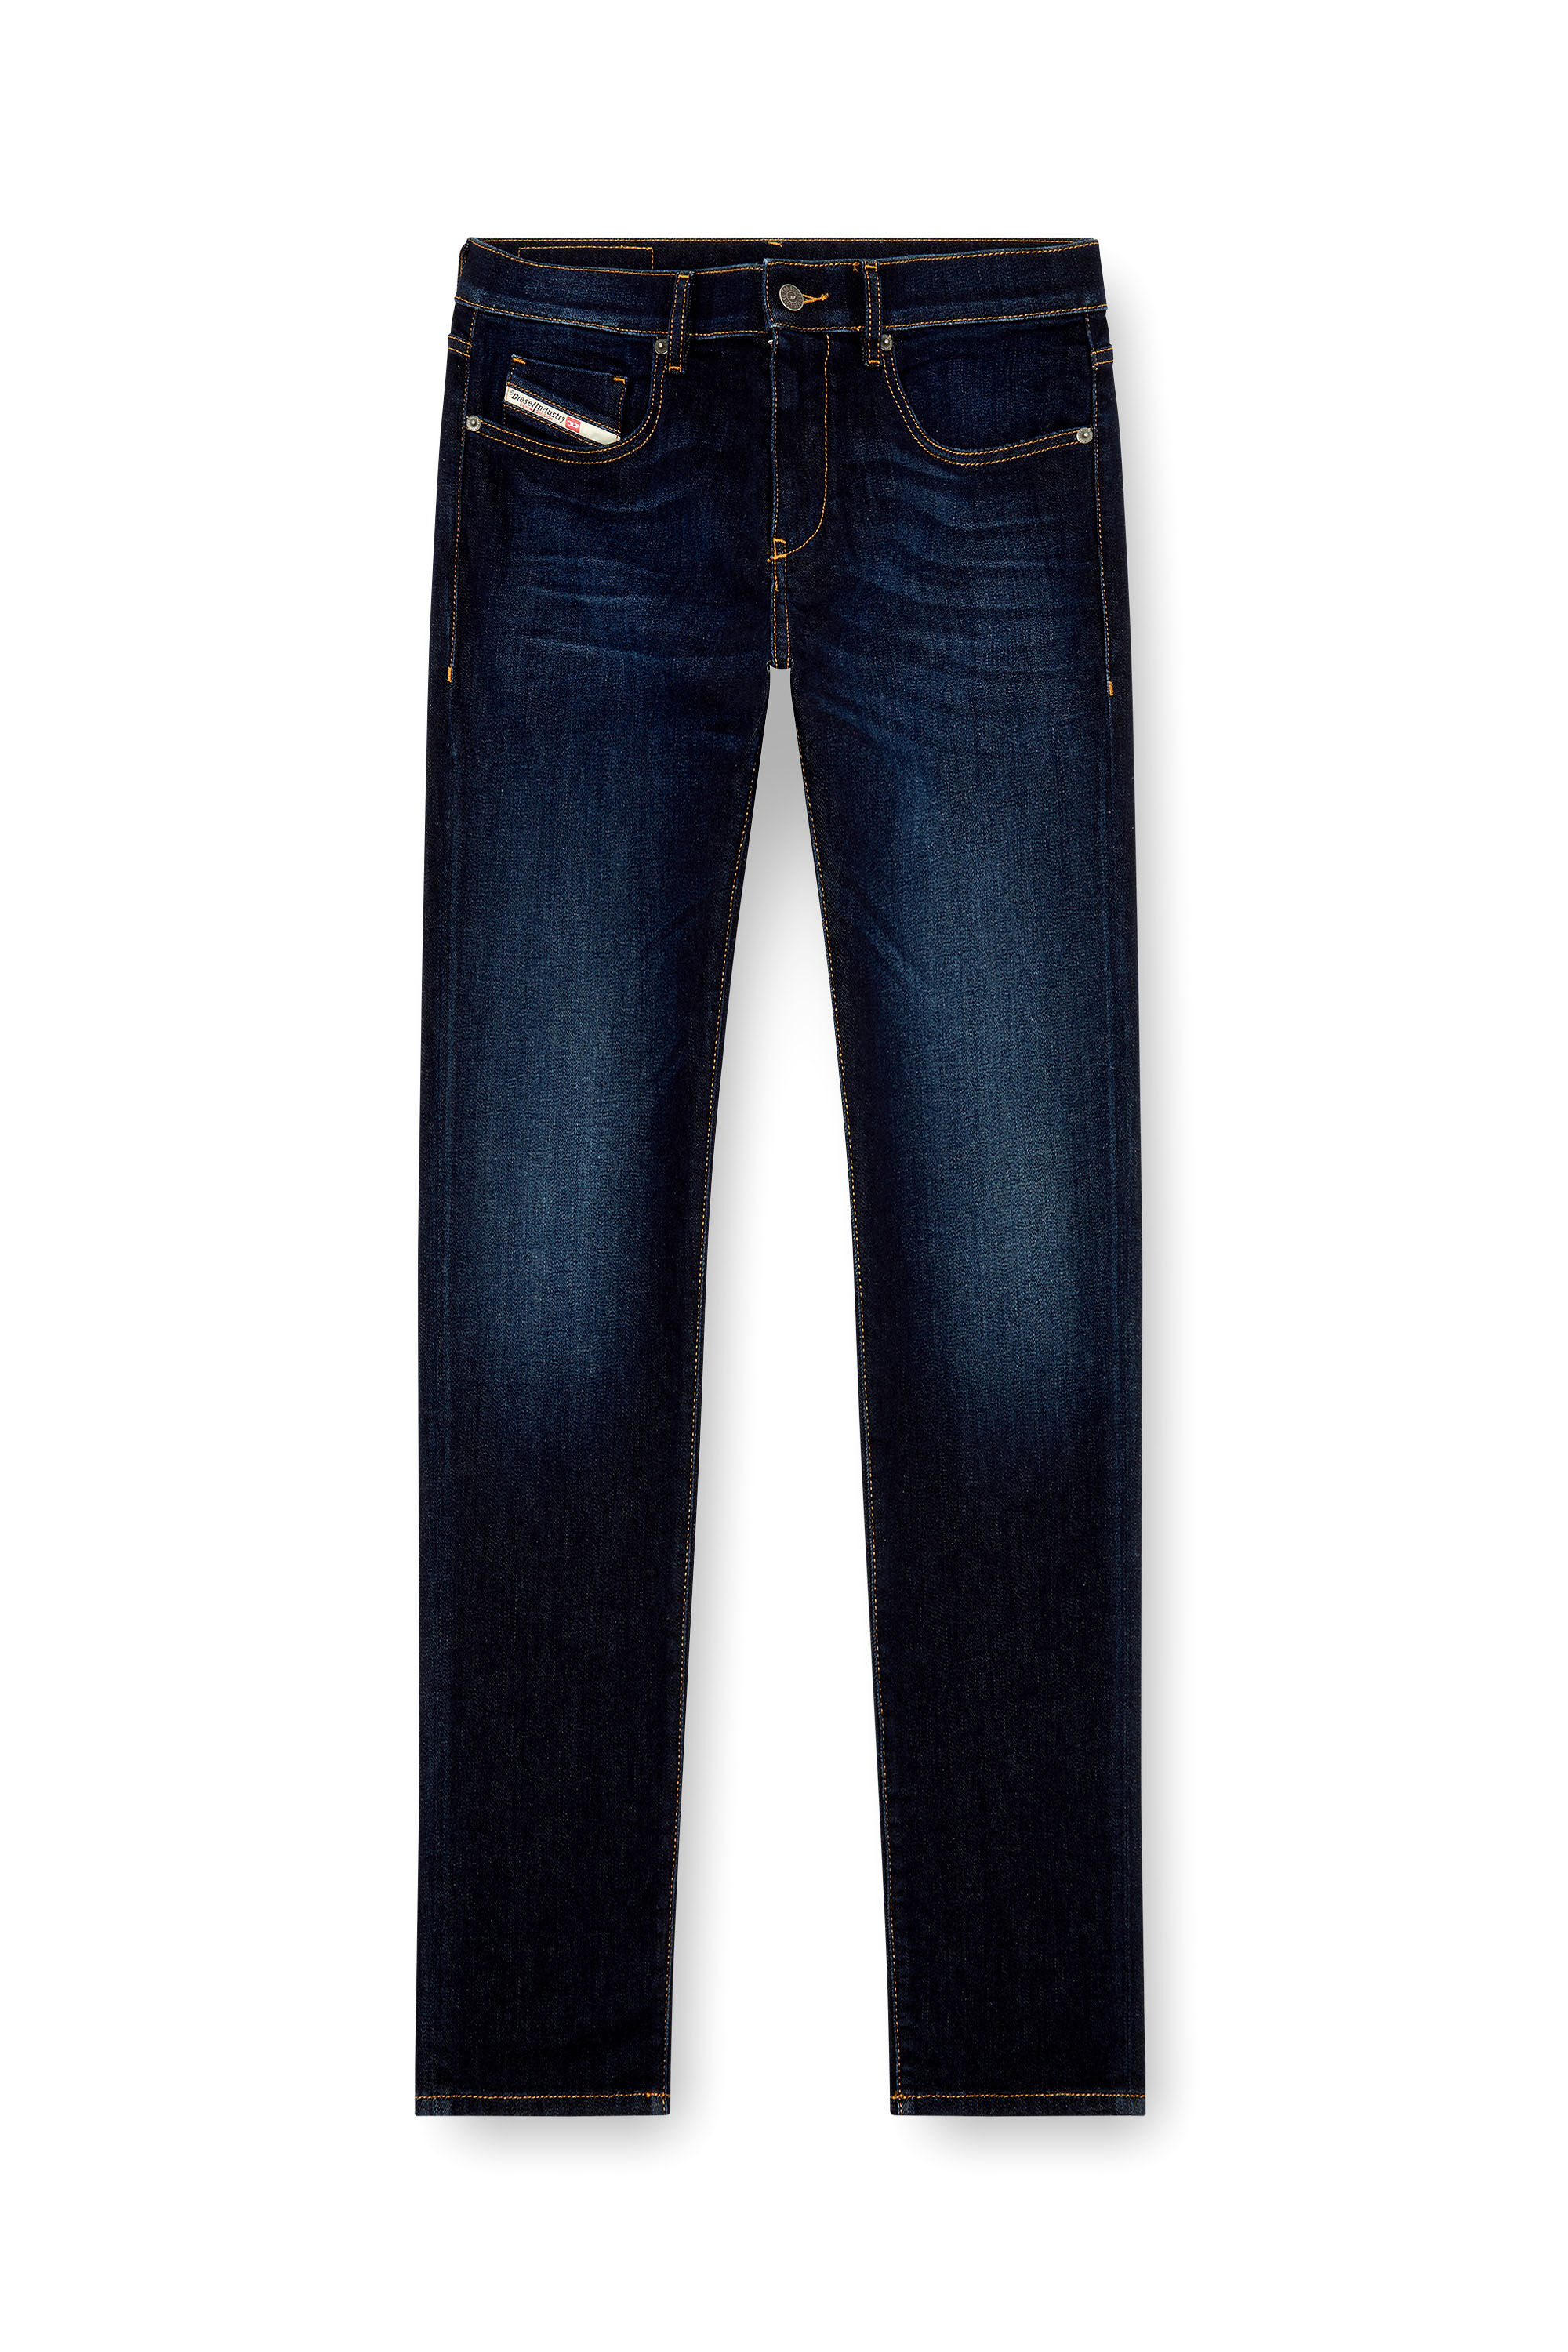 Diesel - Slim Jeans 2019 D-Strukt 009ZS, Hombre Slim Jeans - 2019 D-Strukt in Azul marino - Image 2